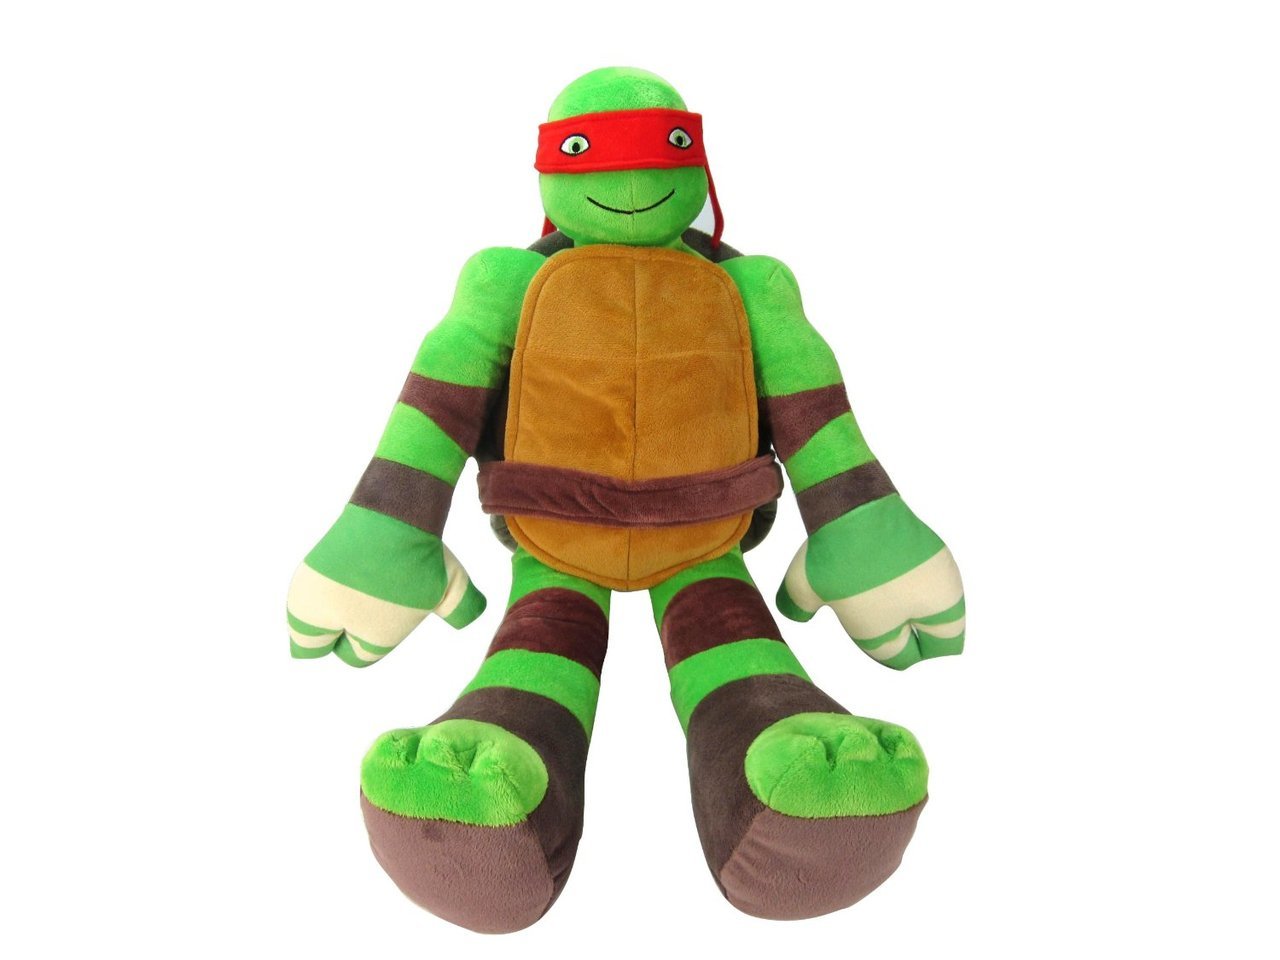 Nickelodeon Teenage Mutant Ninja Turtles Raphael Pillow Buddy, 1 Each - image 2 of 4